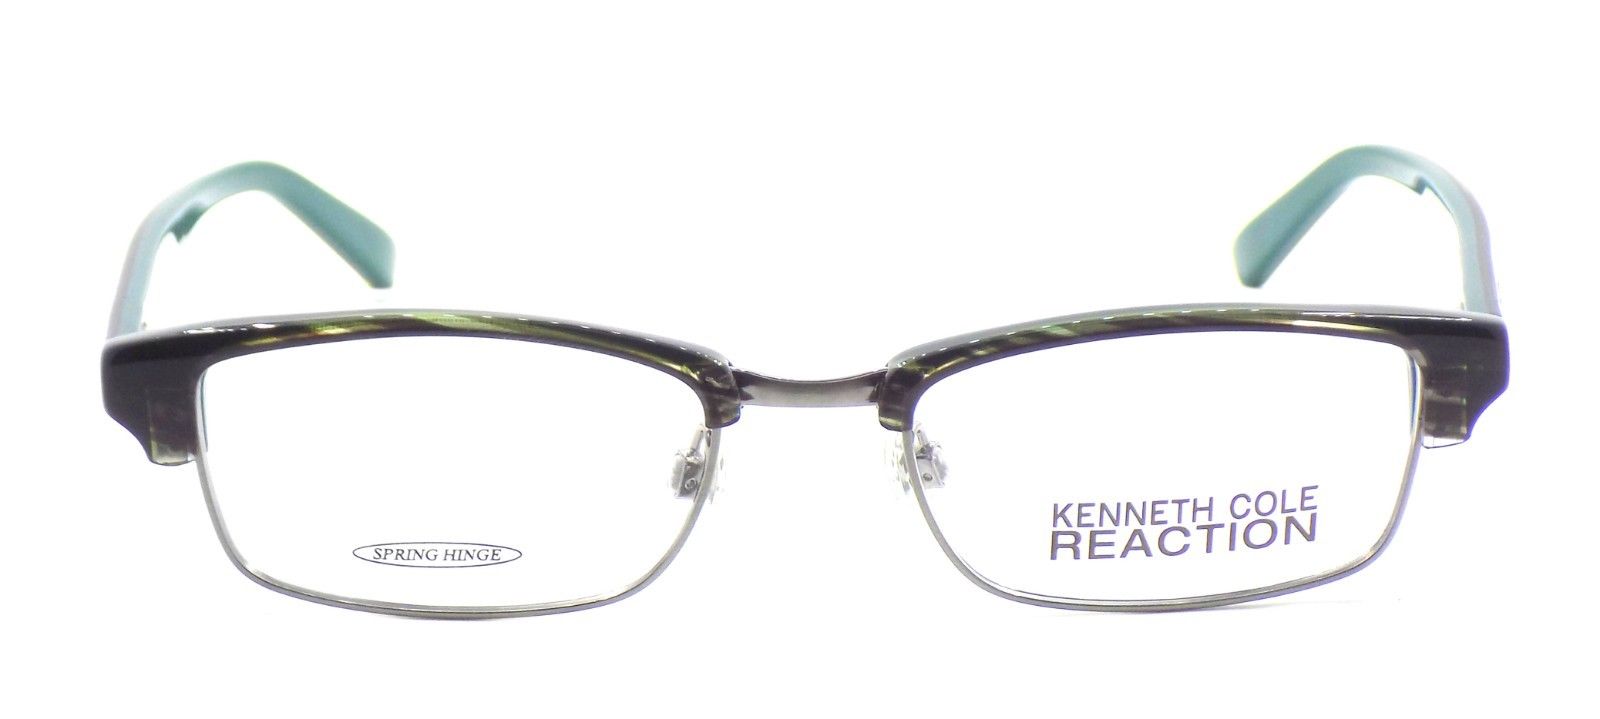 2-Kenneth Cole REACTION KC0741 098 Women's Eyeglasses Frames 50-18-140 Dark Green-664689593057-IKSpecs